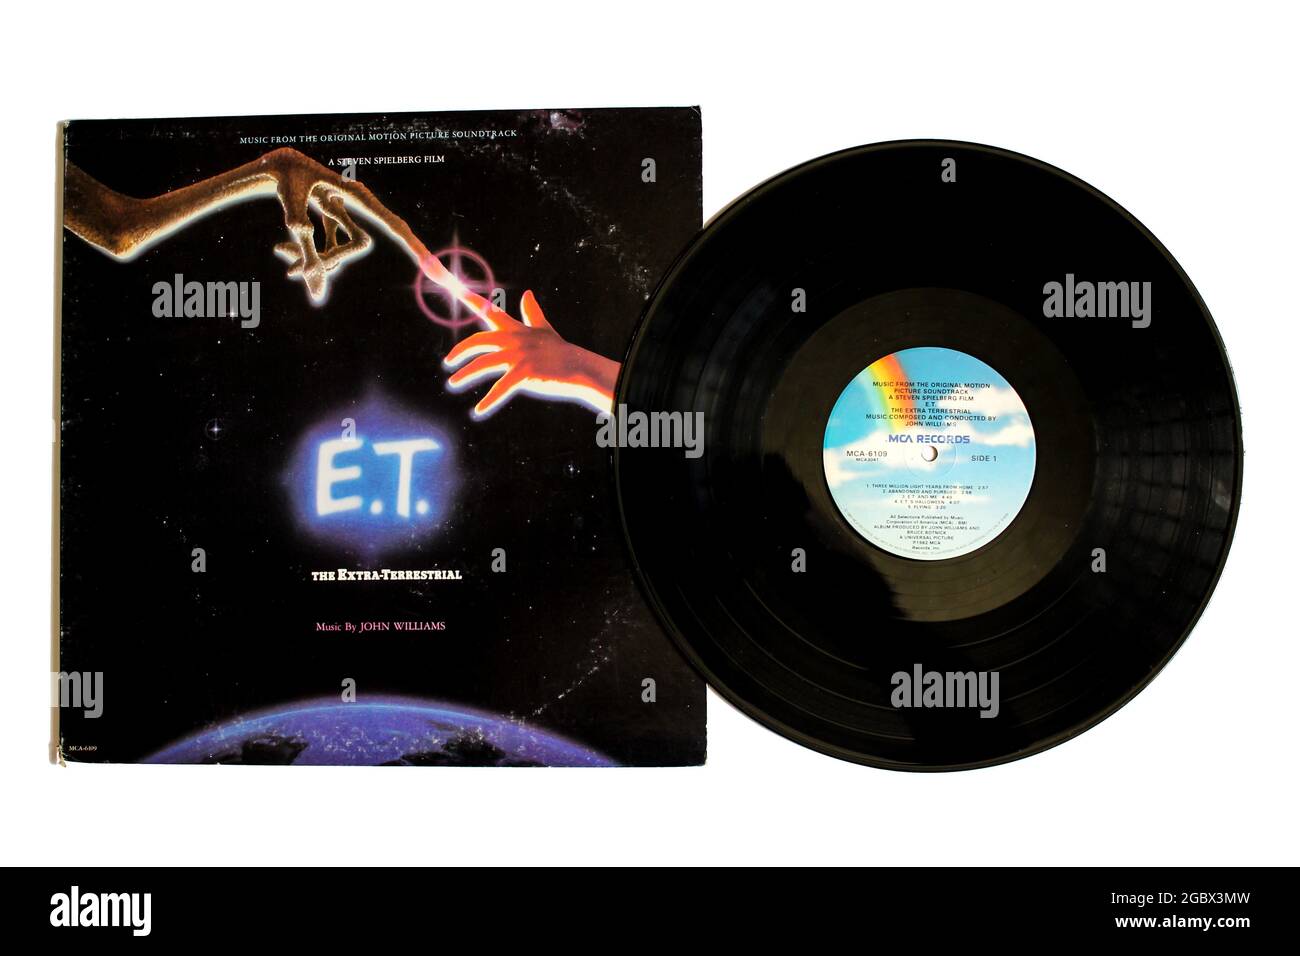 E.T. the Extra-Terrestrial soundtrack album on vinyl record LP disc for the 1982 blockbuster film by Steven Spielberg. Album cover Stock Photo